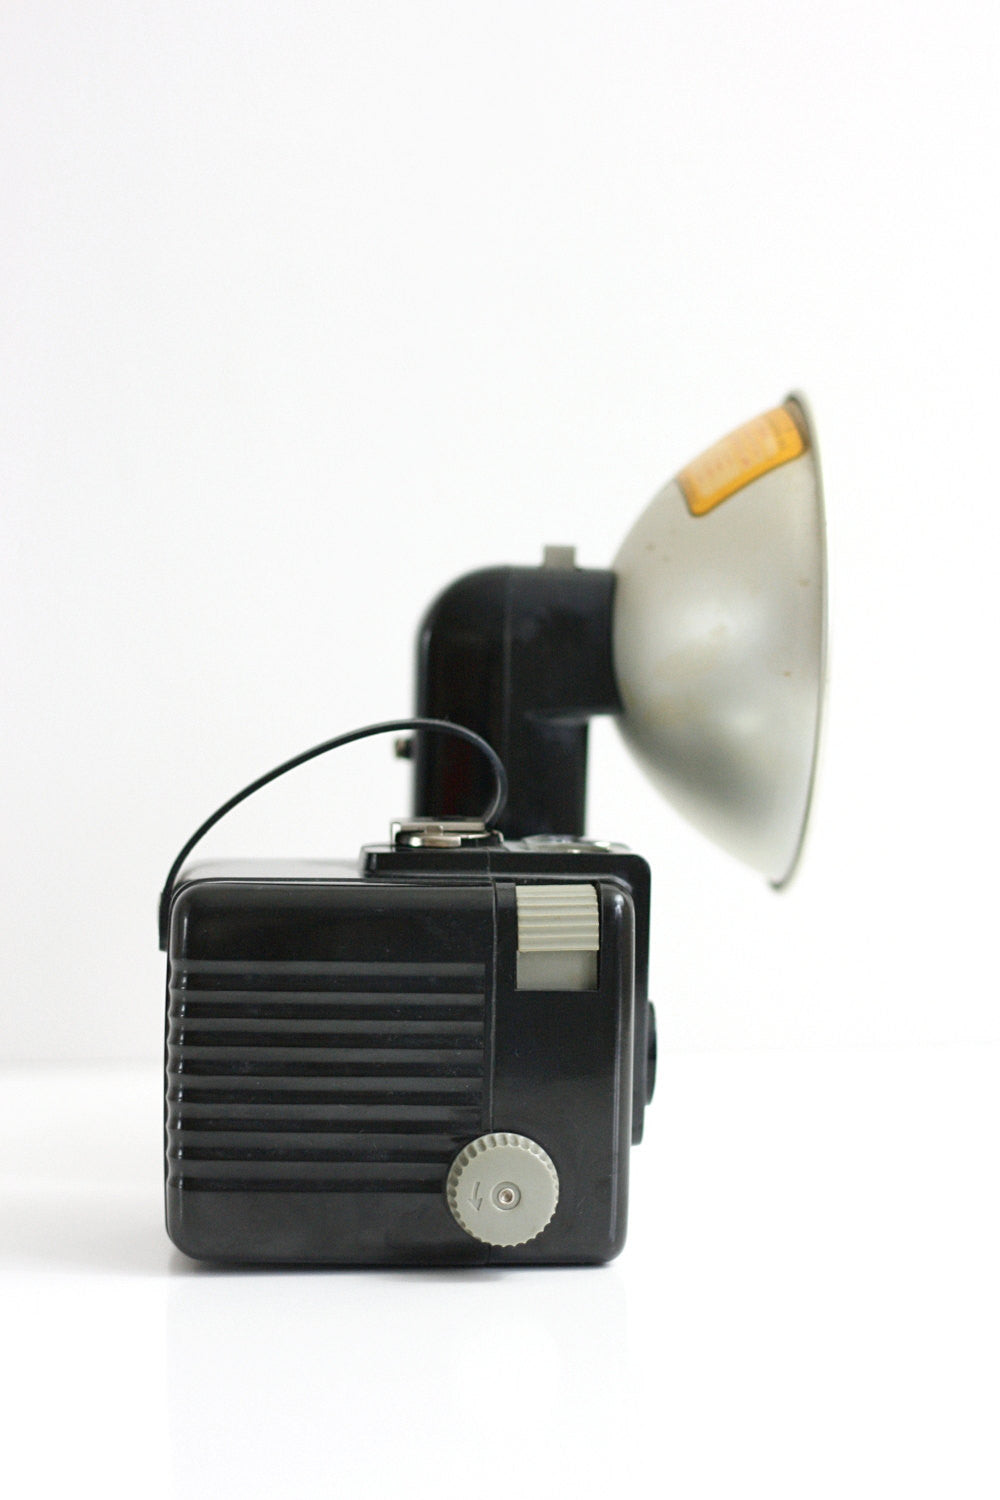 SOLD - Vintage Kodak Brownie Hawkeye 620 Bakelite Box Camera with Flash Attachment